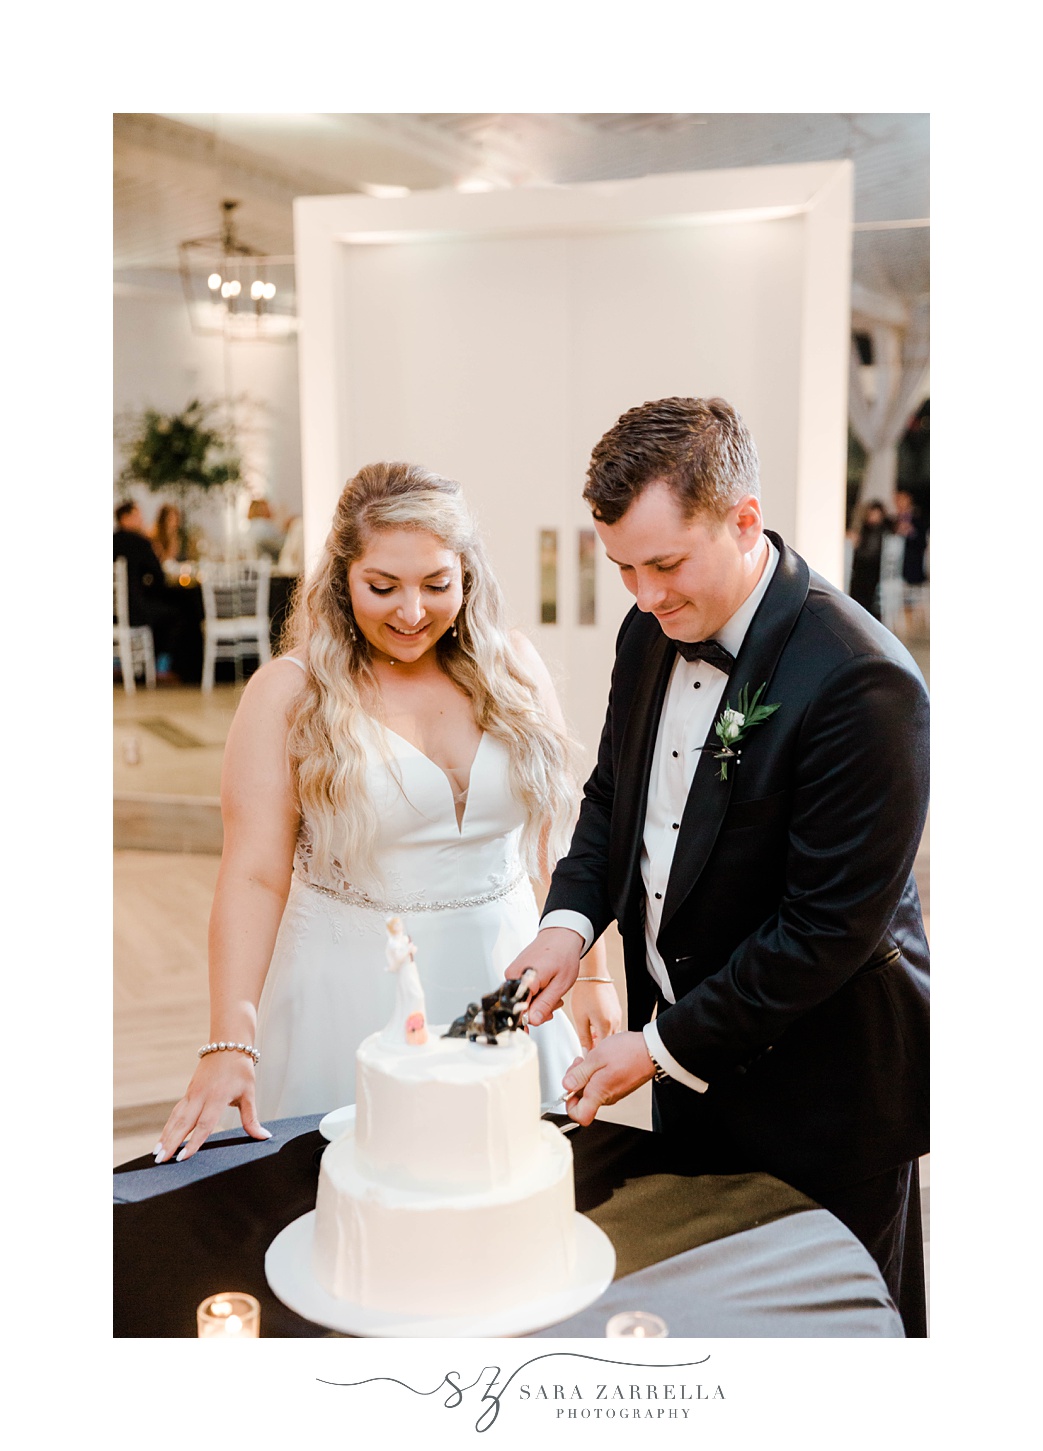 couple cuts wedding cake for RI wedding reception